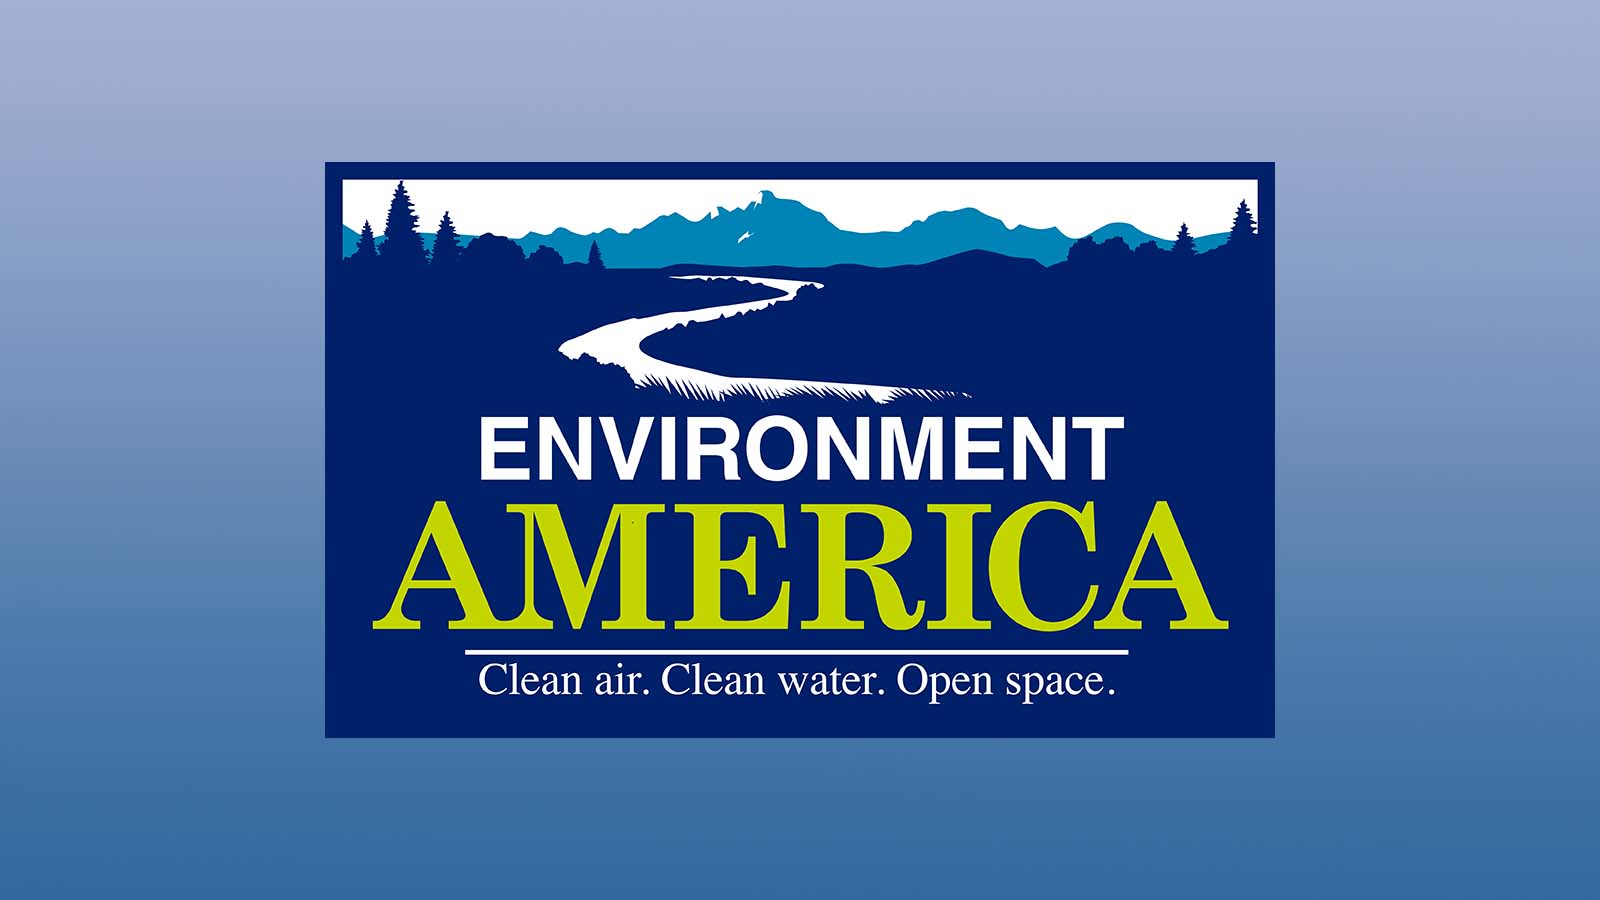 (c) Environmentamerica.org